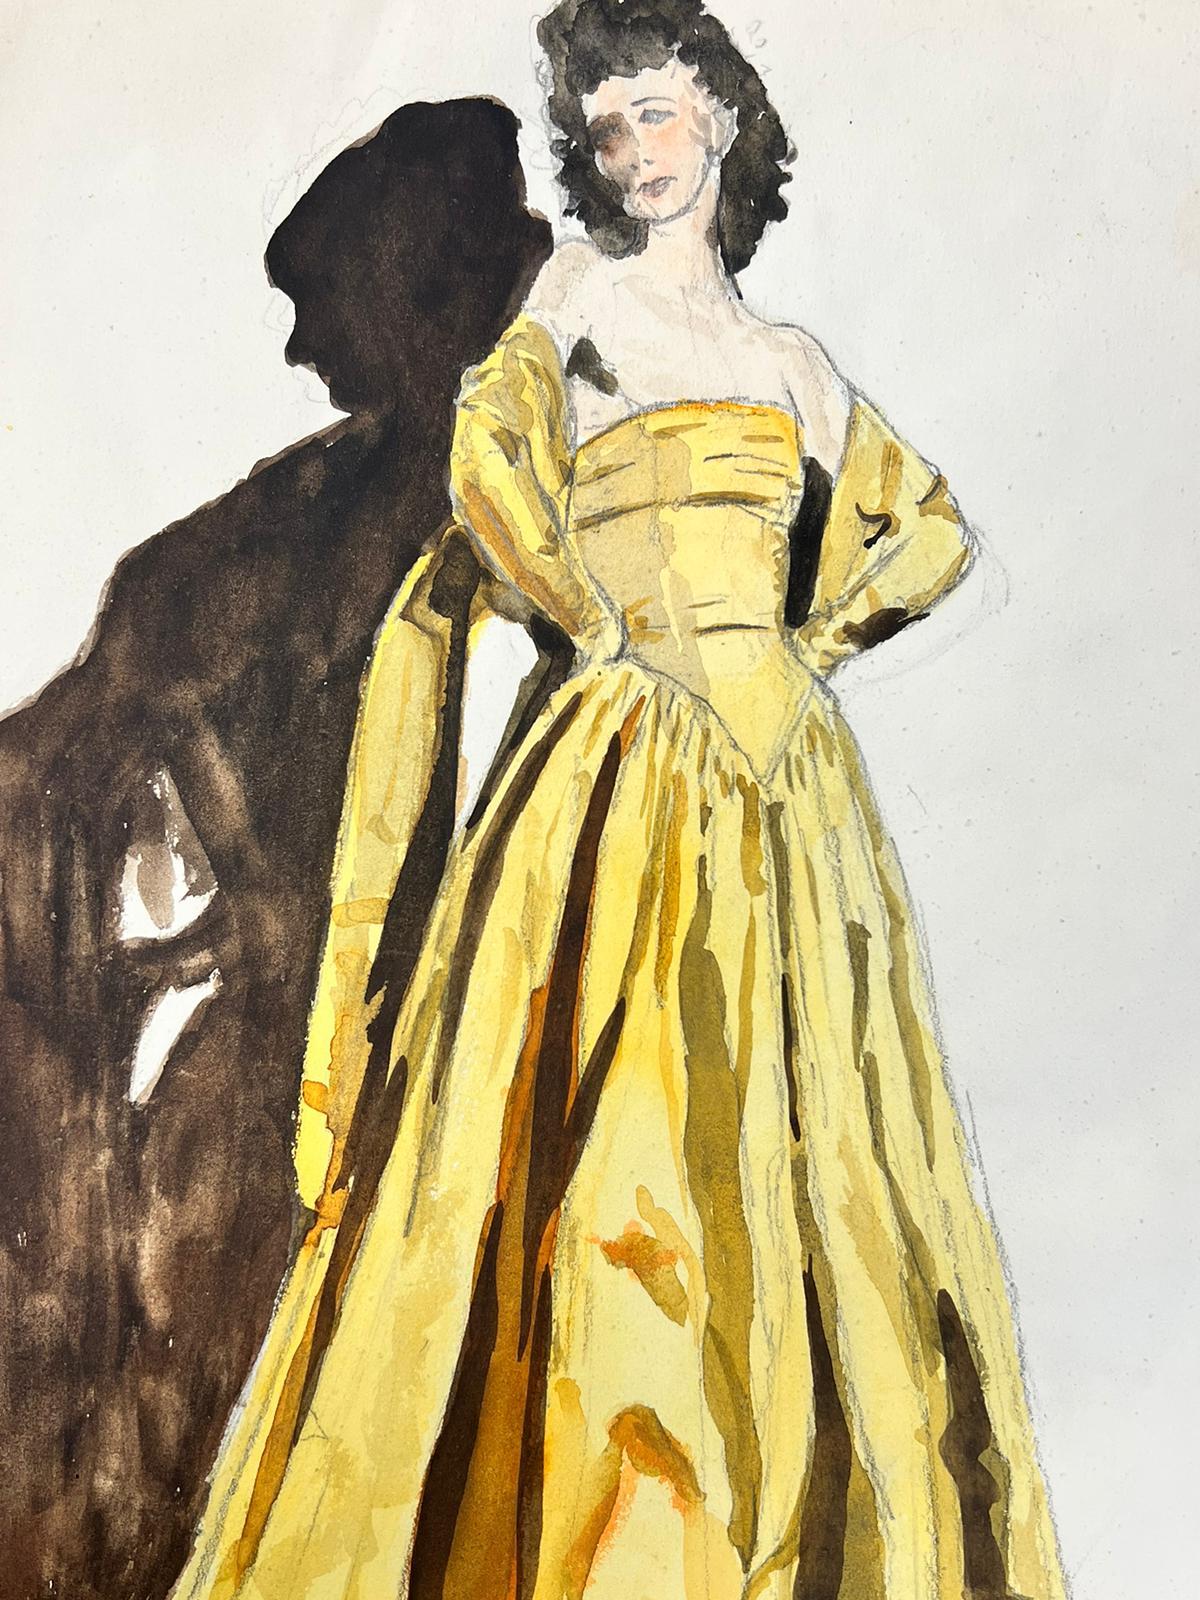 1950s dress silhouette